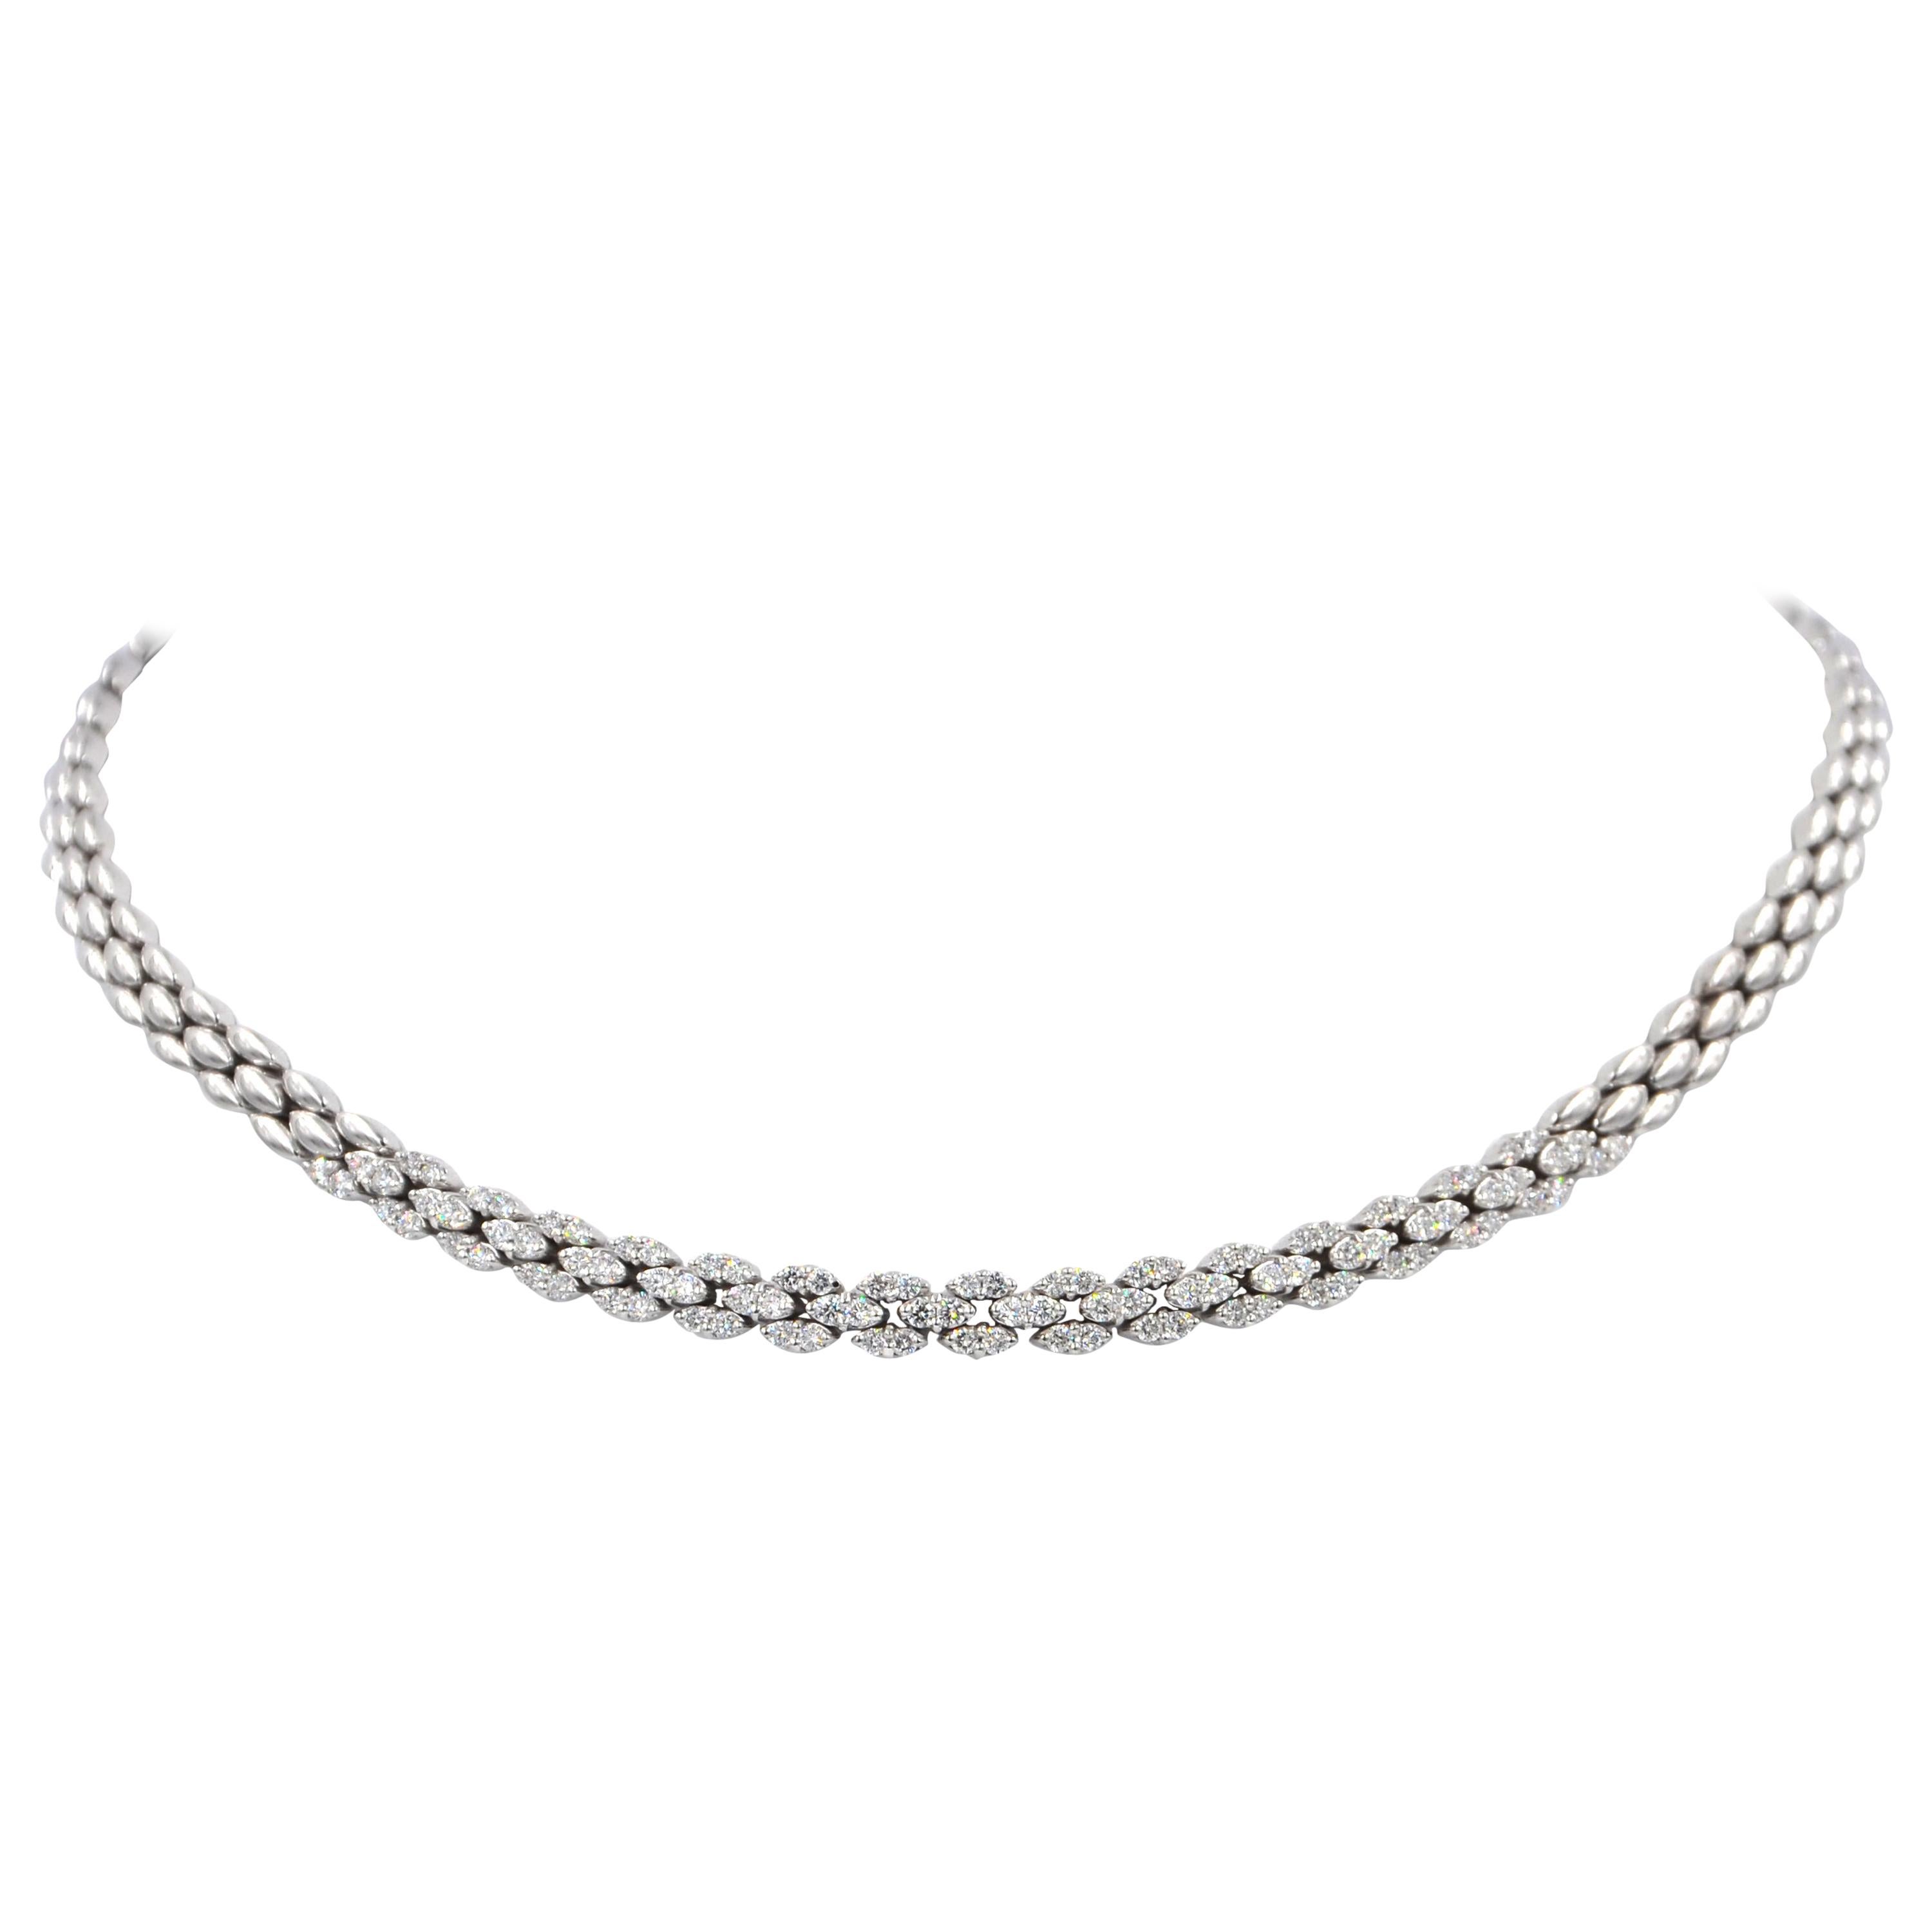 Garavelli 18 Karat White Gold Diamond Necklace